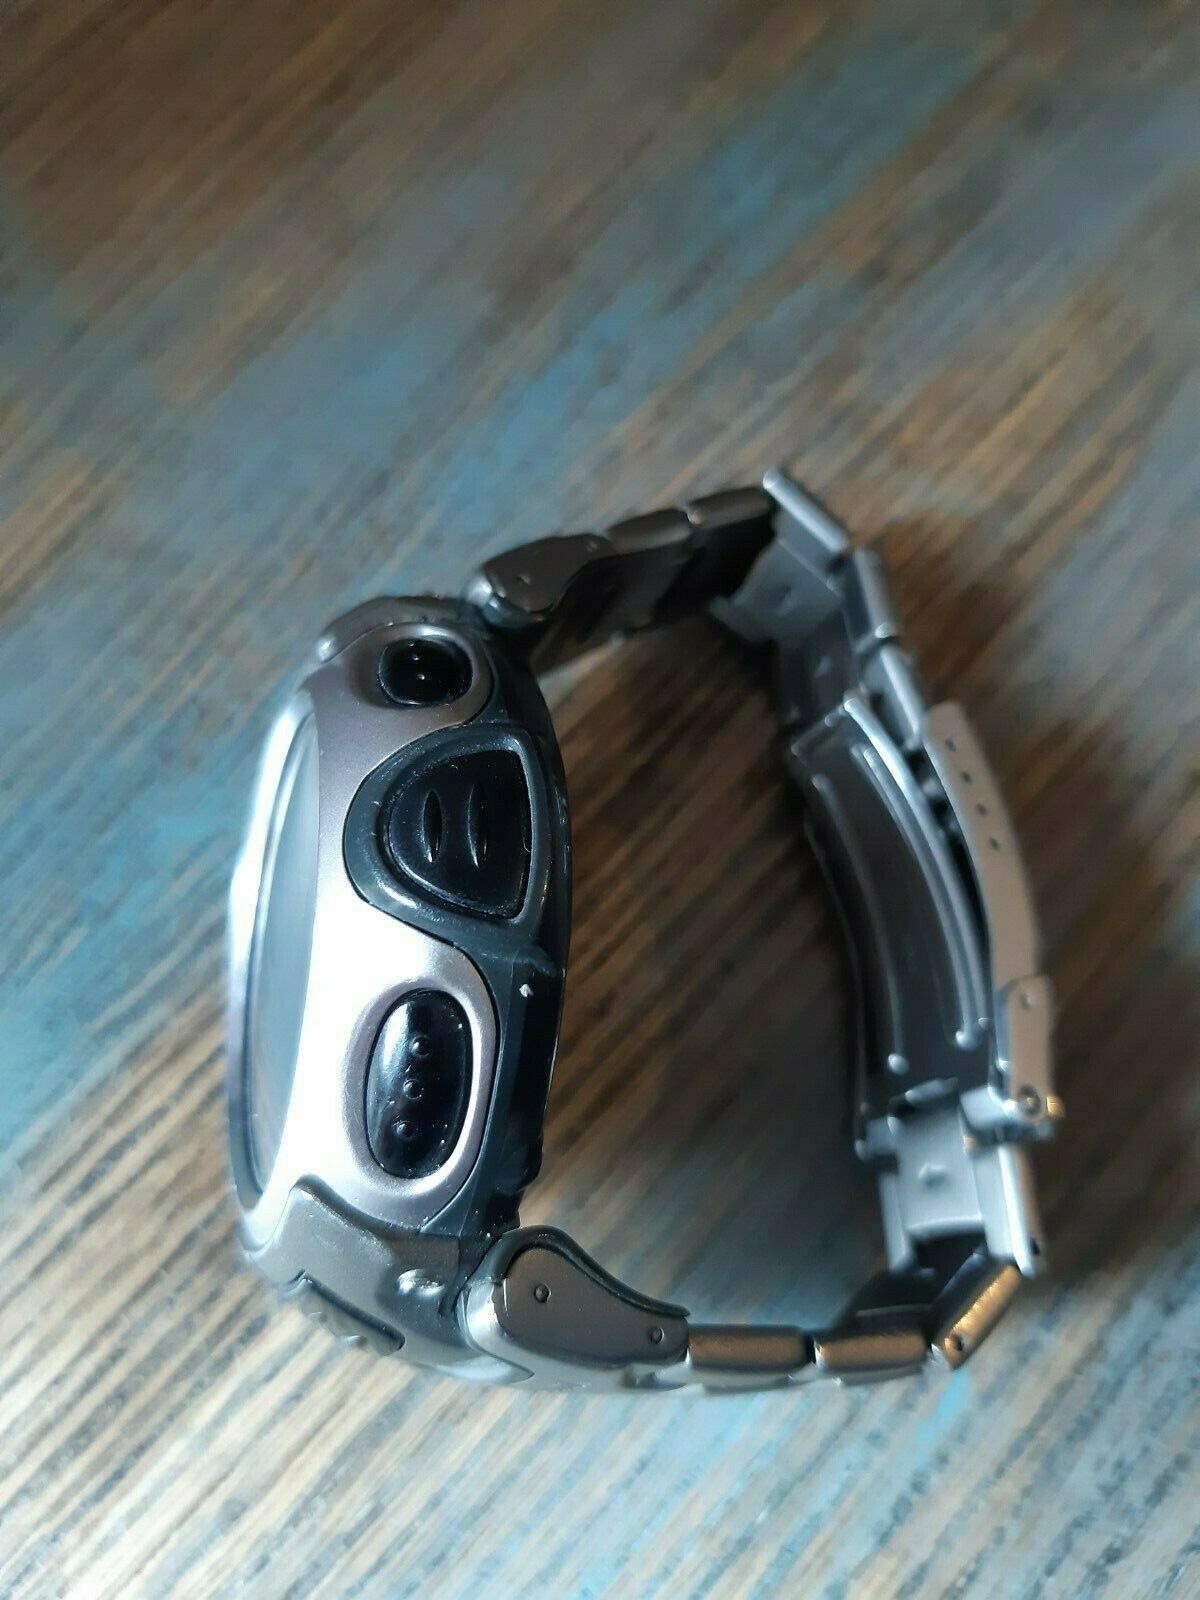 Casio 2471 RARE Protrek Pathfinder Prg-50 Solar Watch Stainless Steel for  sale online